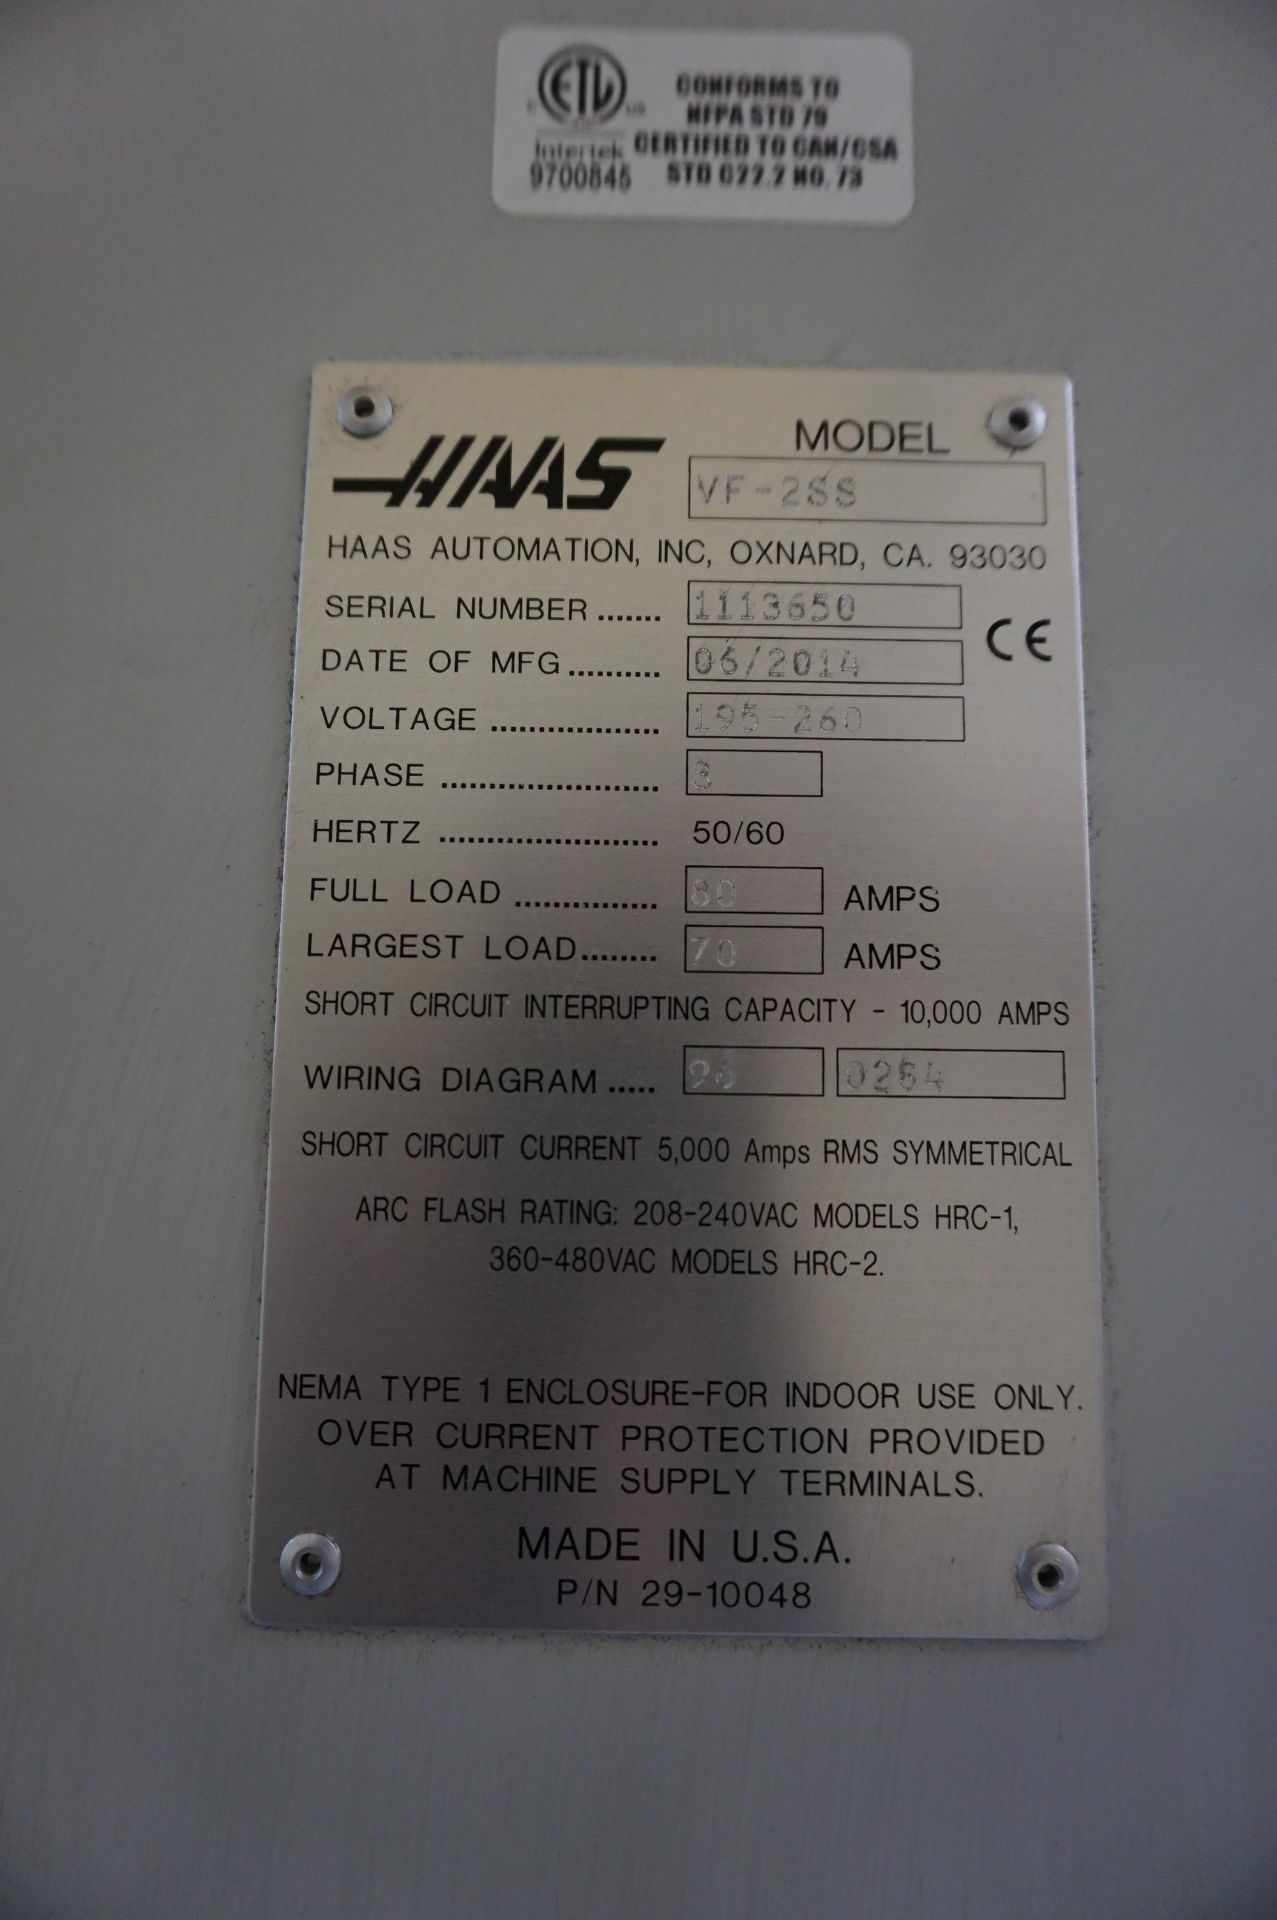 2014 HAAS VF-2SS CNC VERTICAL MACHINING CENTER, S/N 1113650, MFG. 06/2014, 30 HP 12,000 RPM - Image 12 of 12